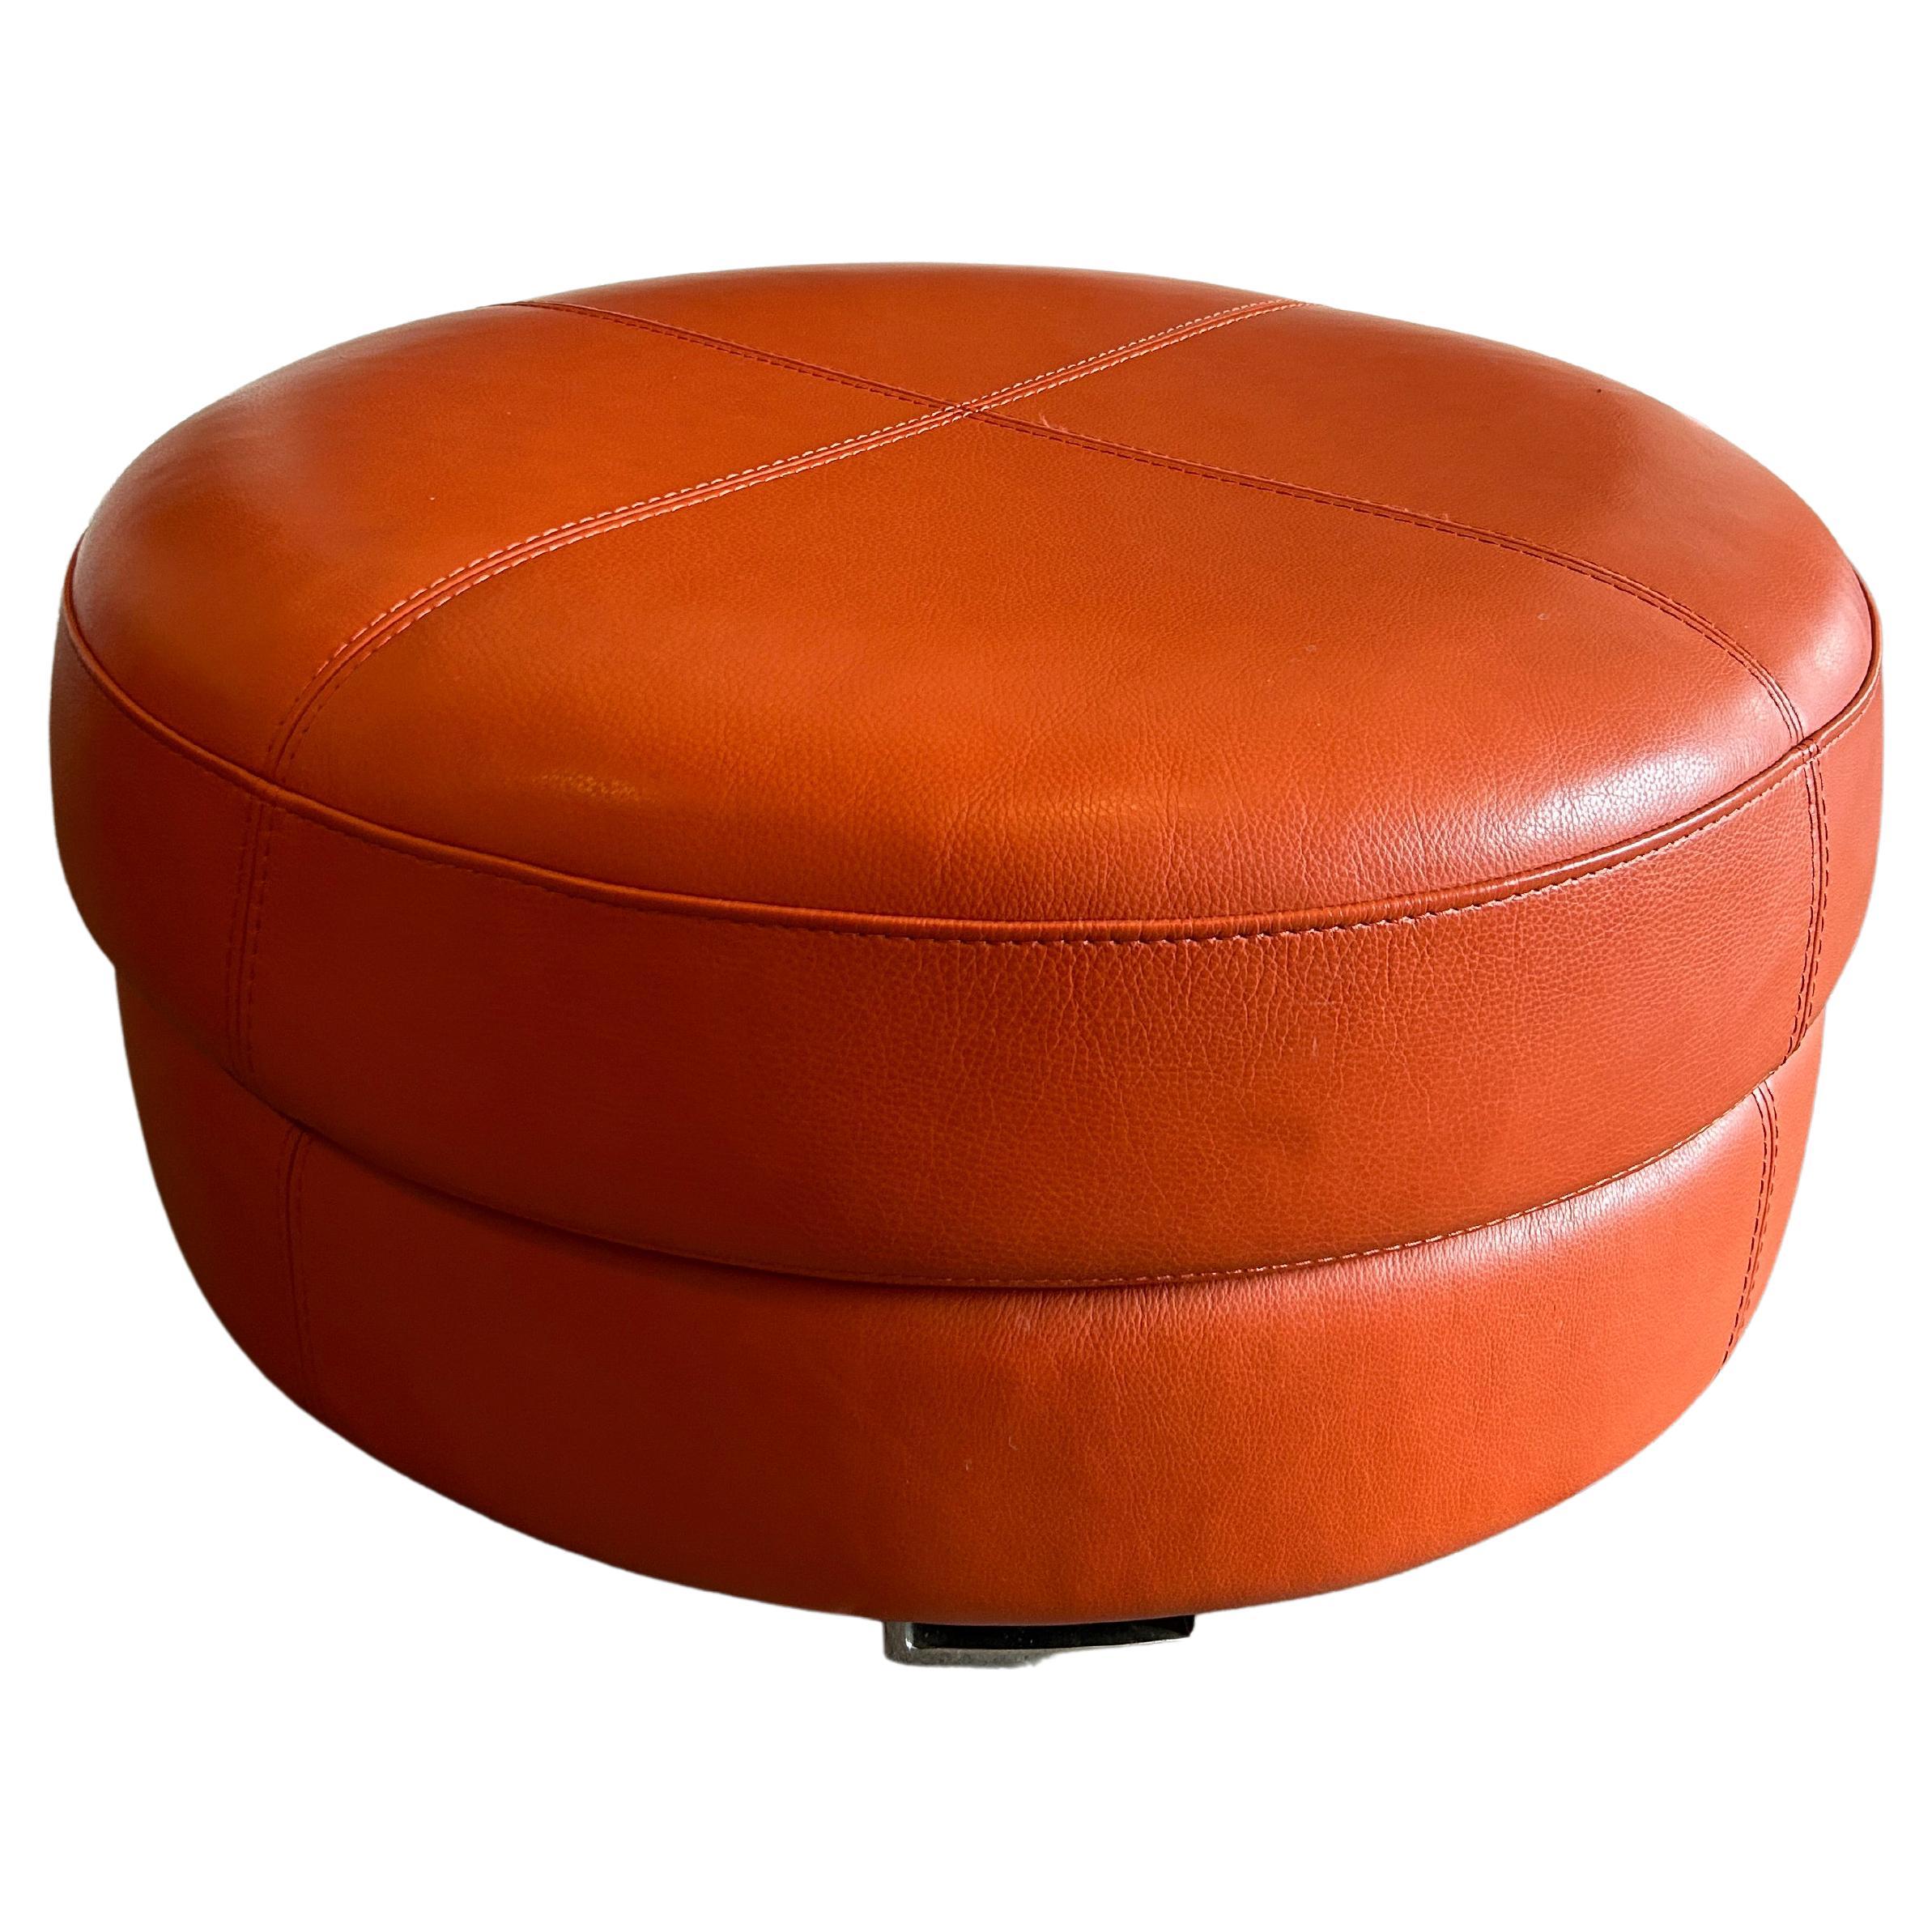 Mid-Century Modern Round Orange Leather Ottoman Stool Pouf